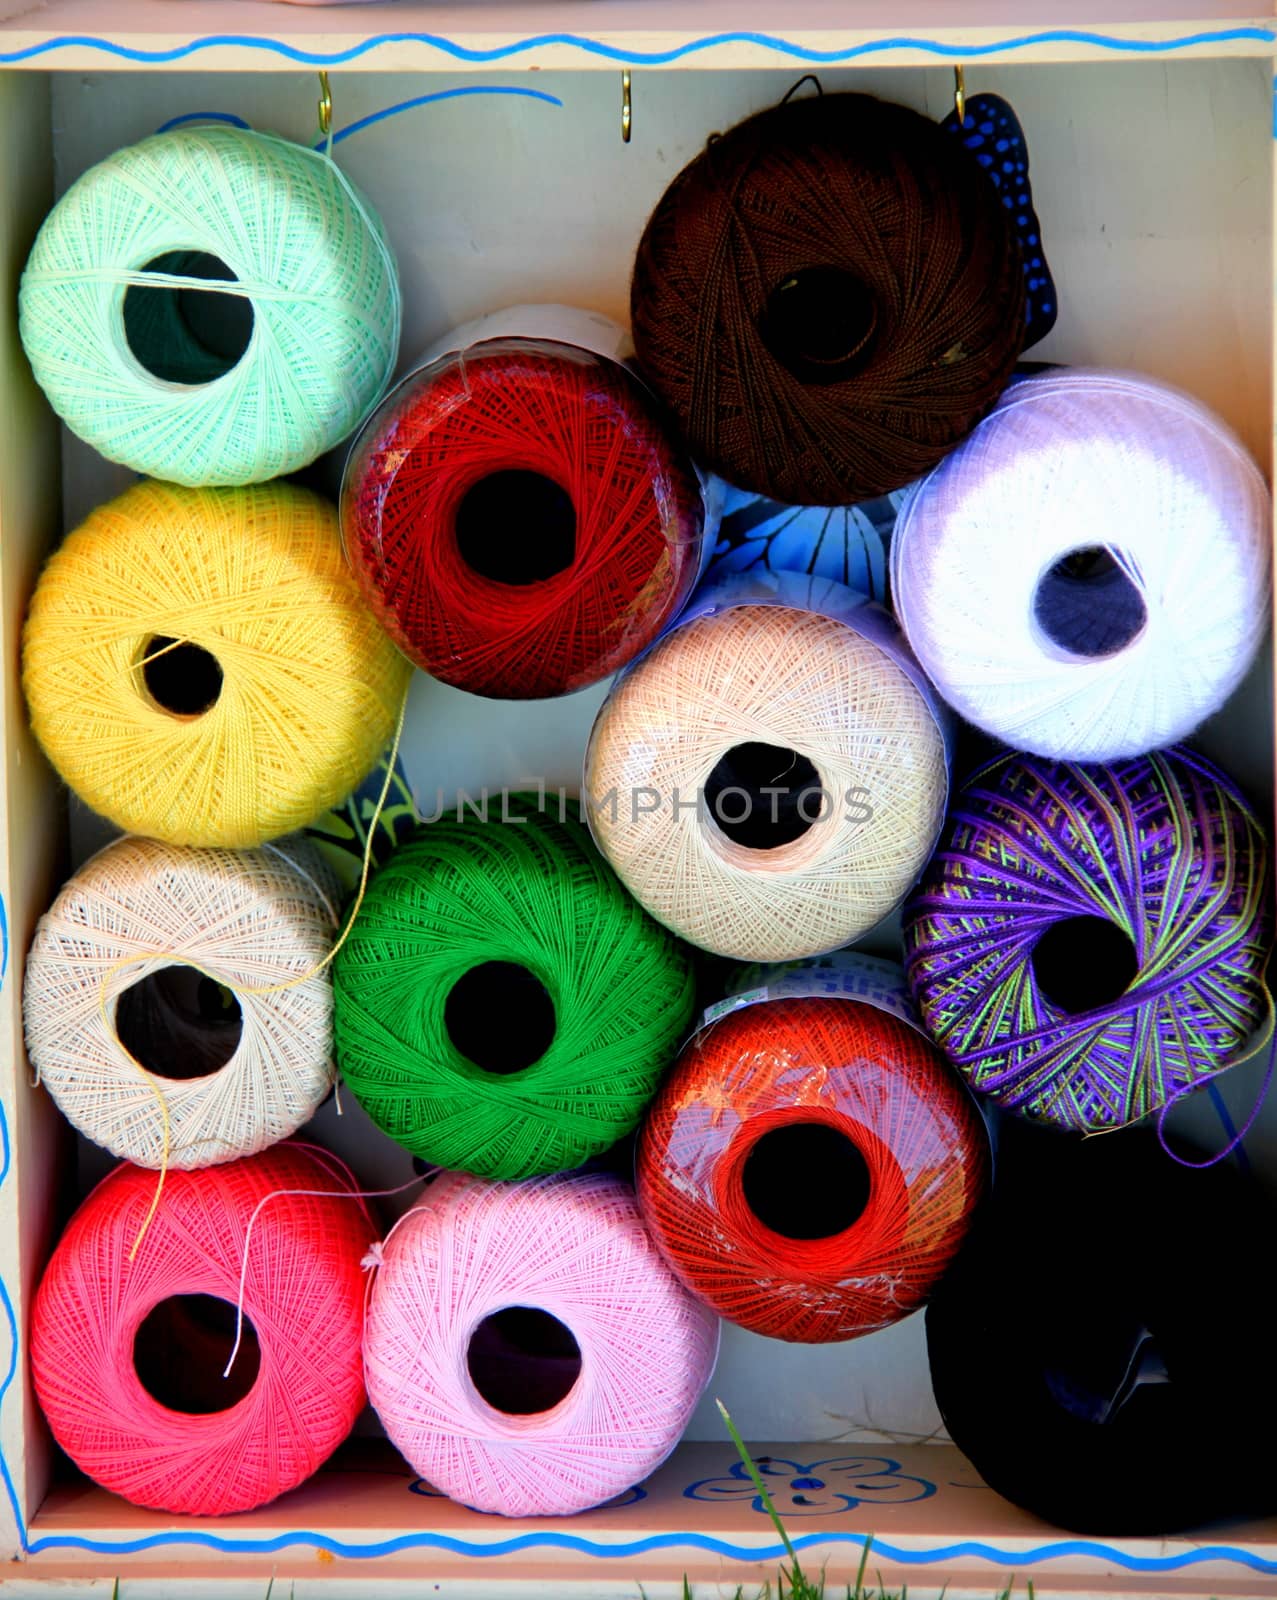 Colorful yarn displayed inside a box.